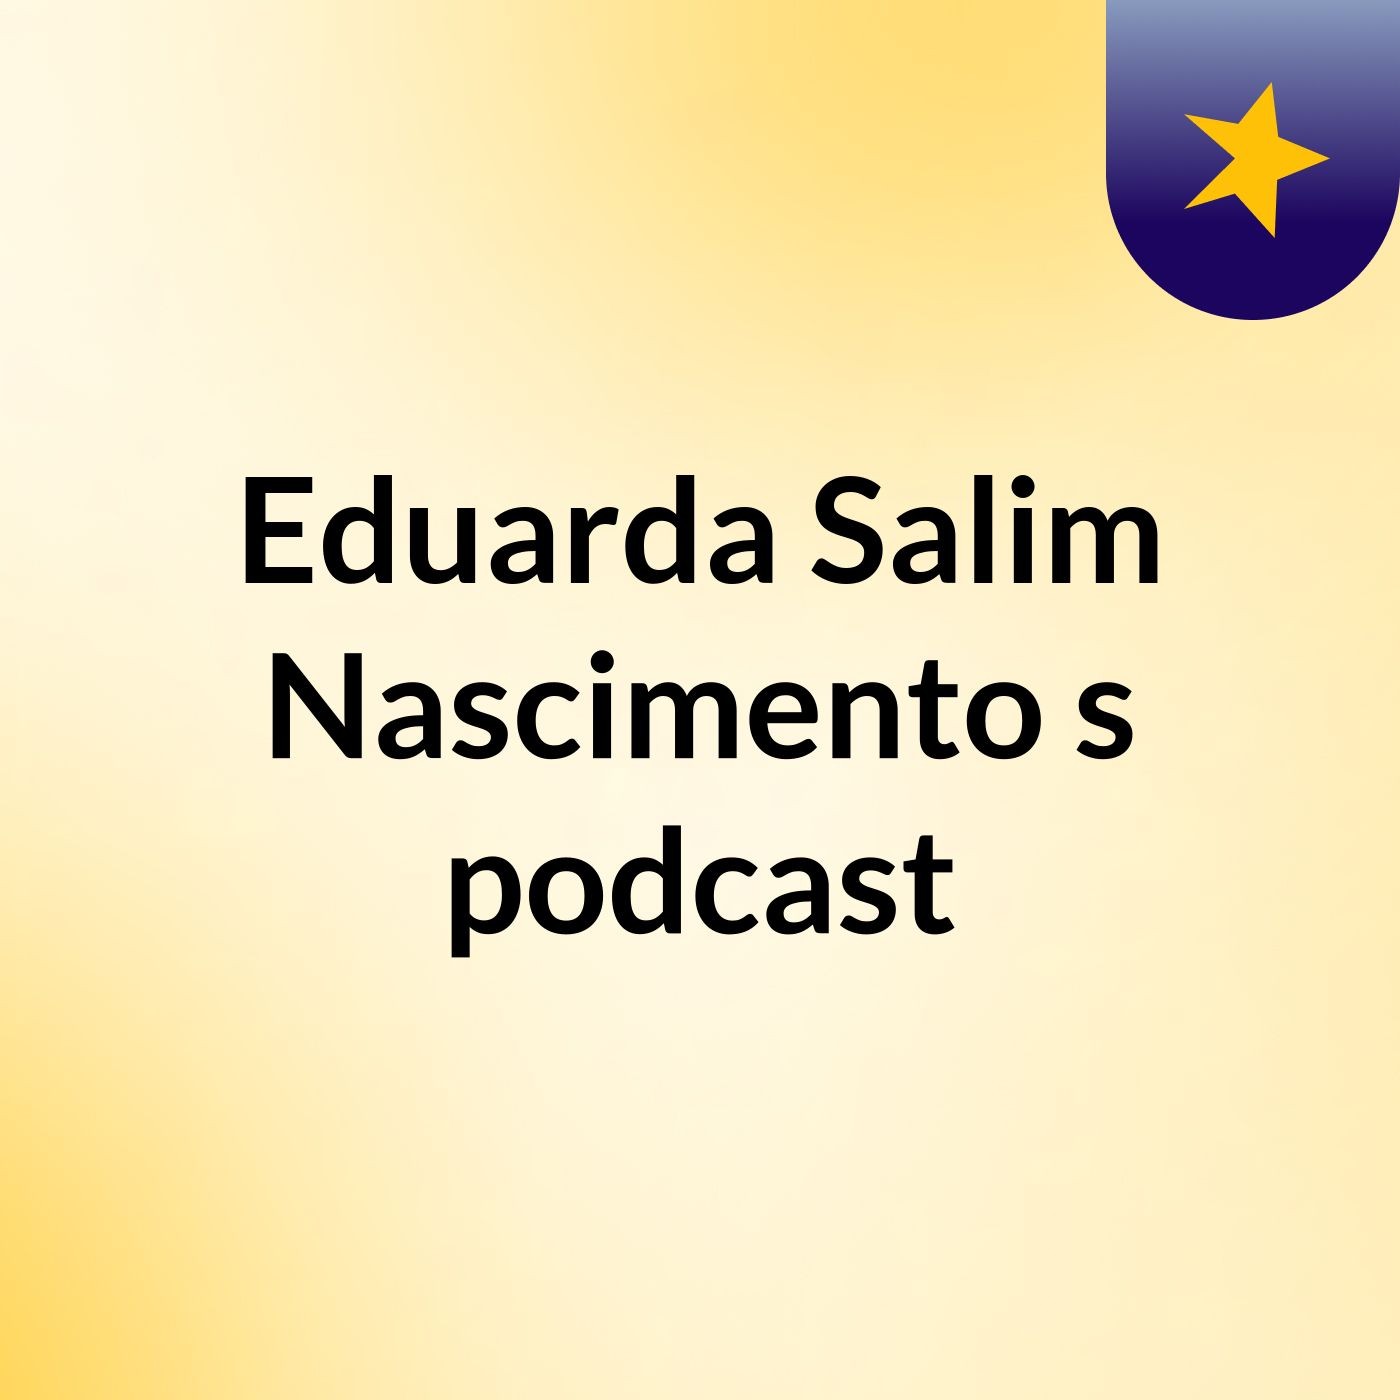 Eduarda Salim Nascimento's podcast